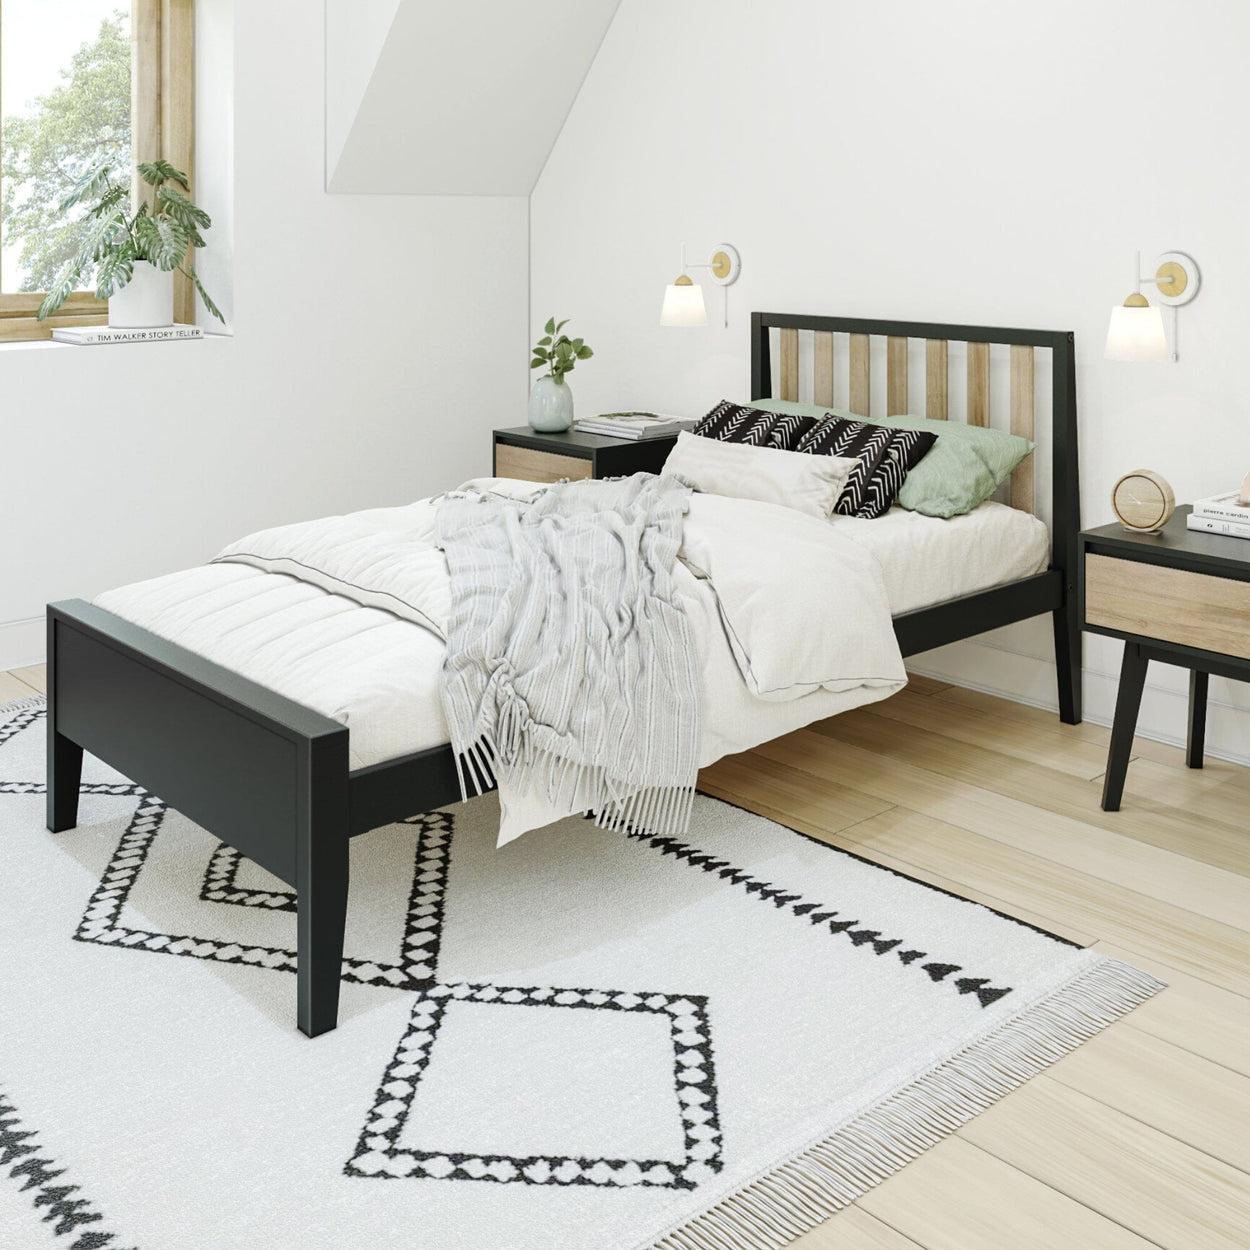 210210-272 : Kids Beds Scandinavian Twin-Size Bed with Slatted Headboard, Black/Blonde